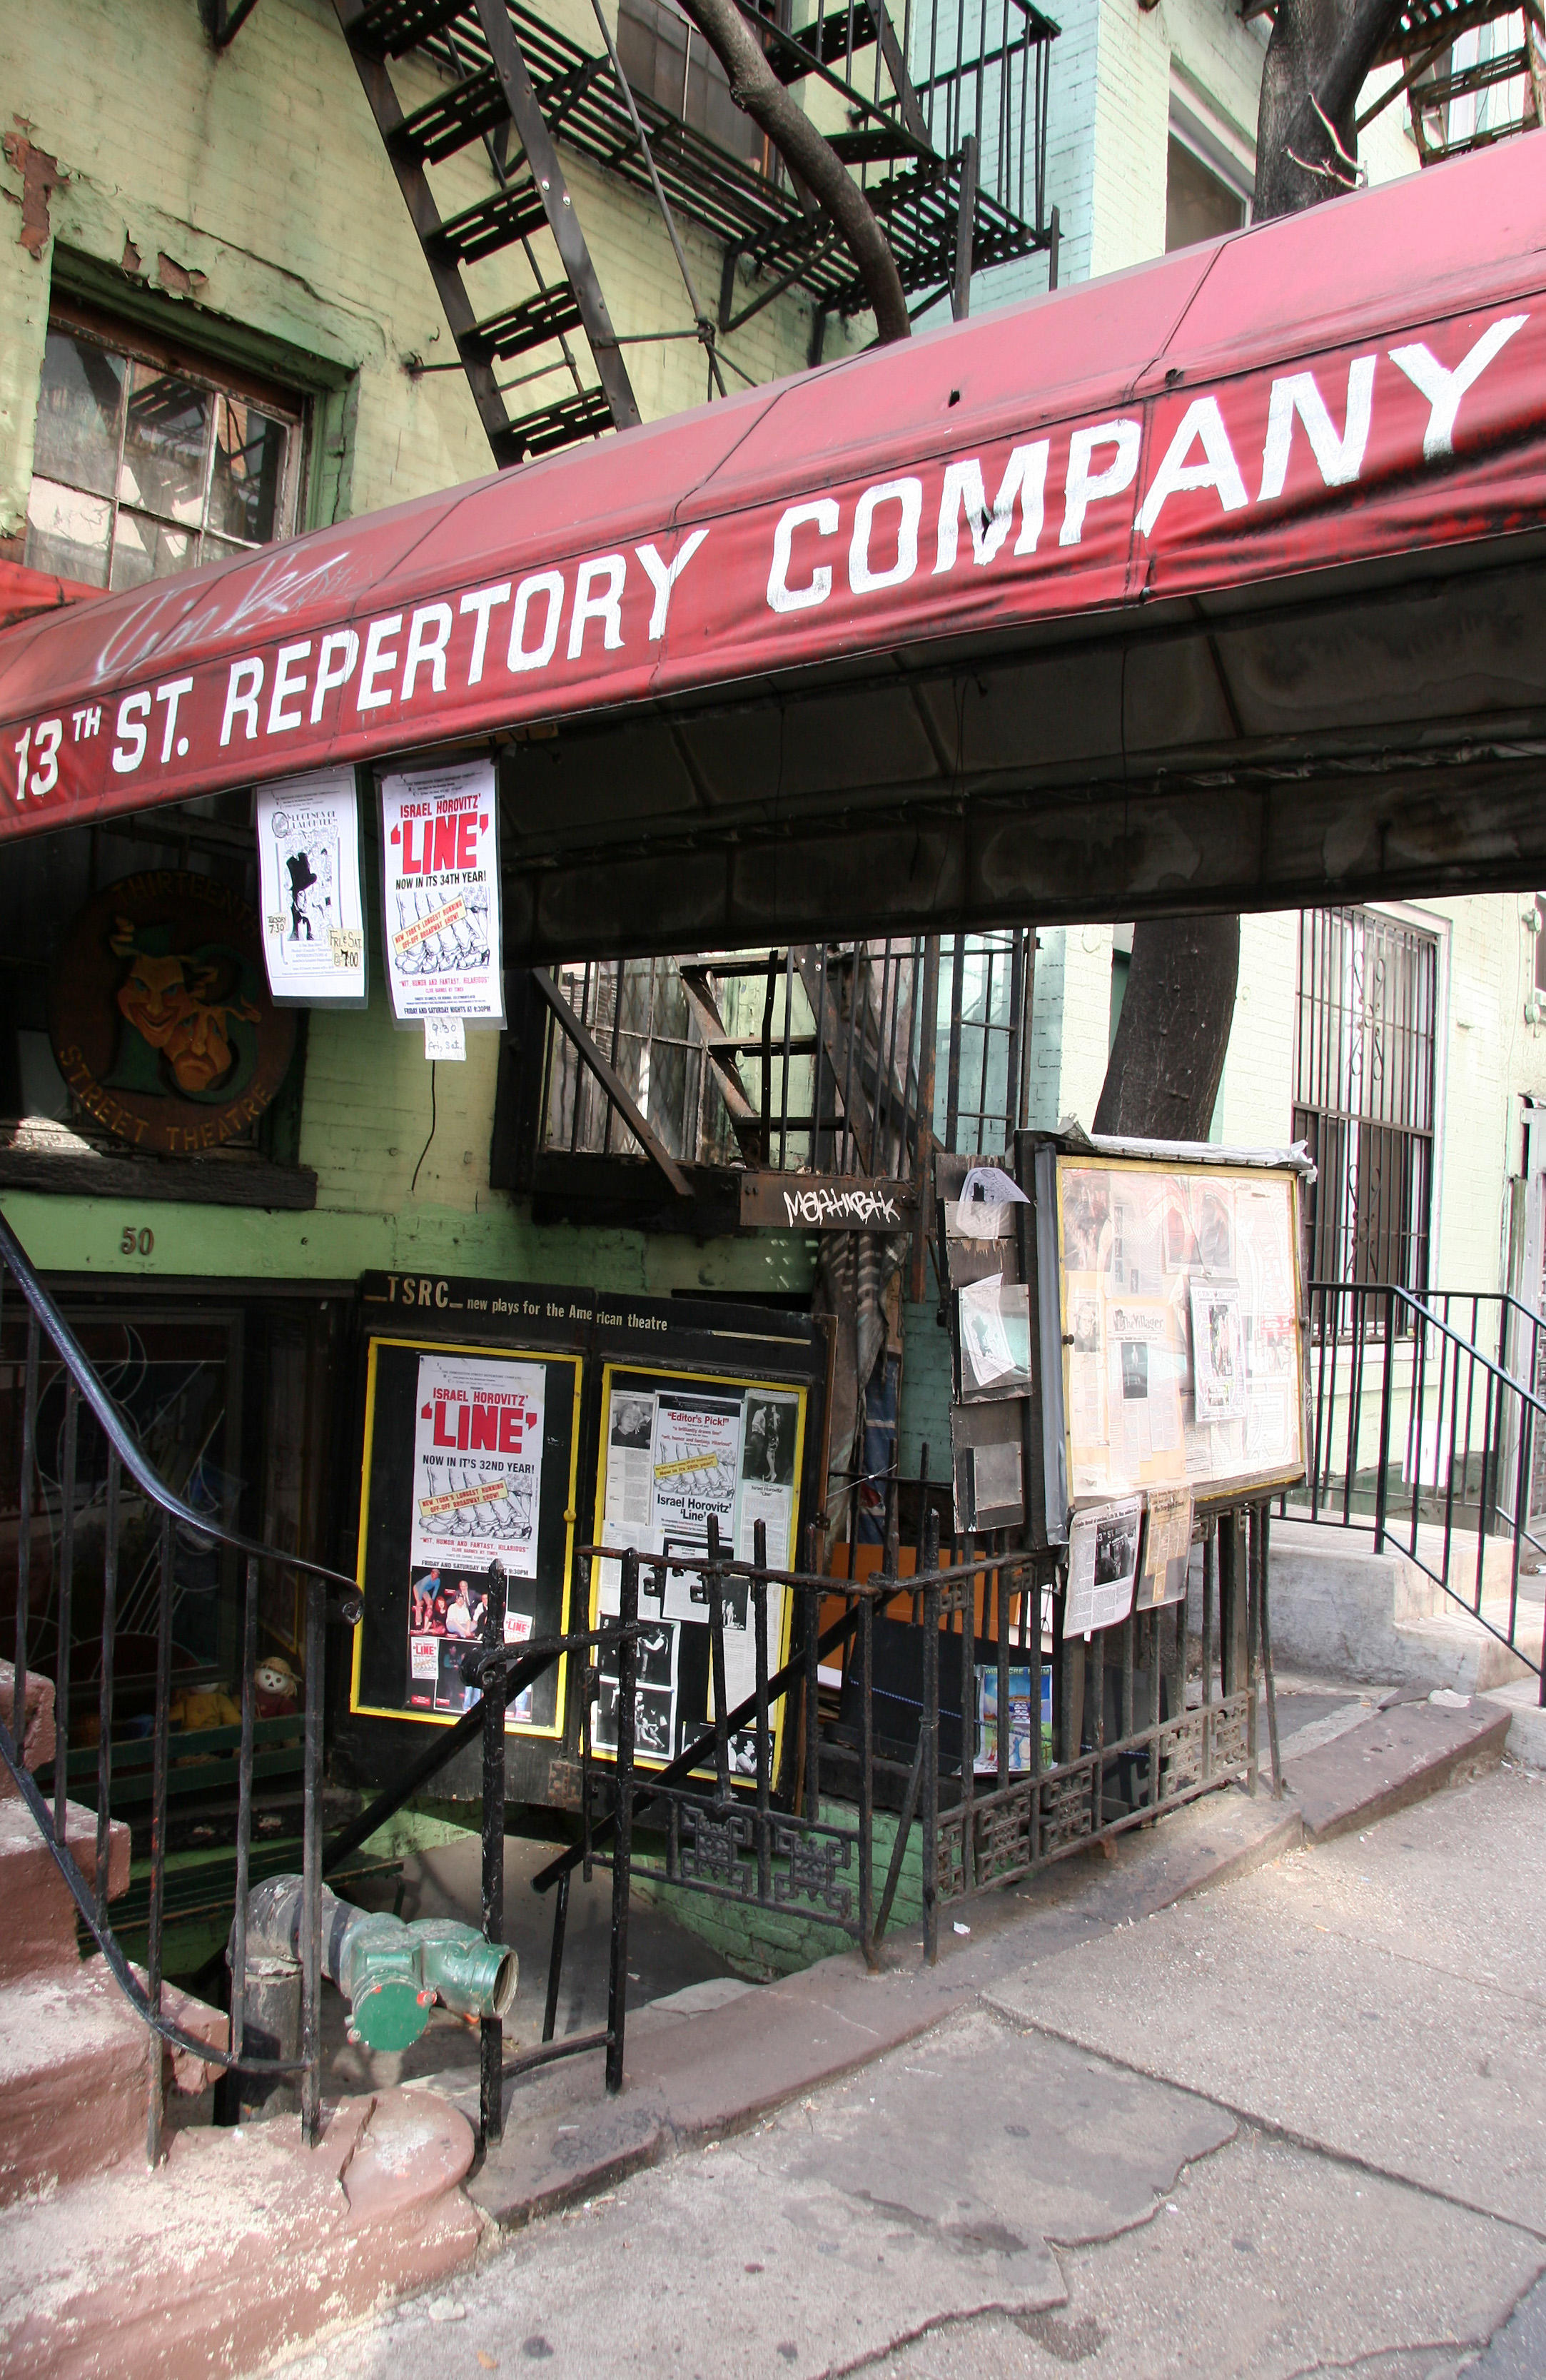 13th Street Repertory Company Theatre Entrance